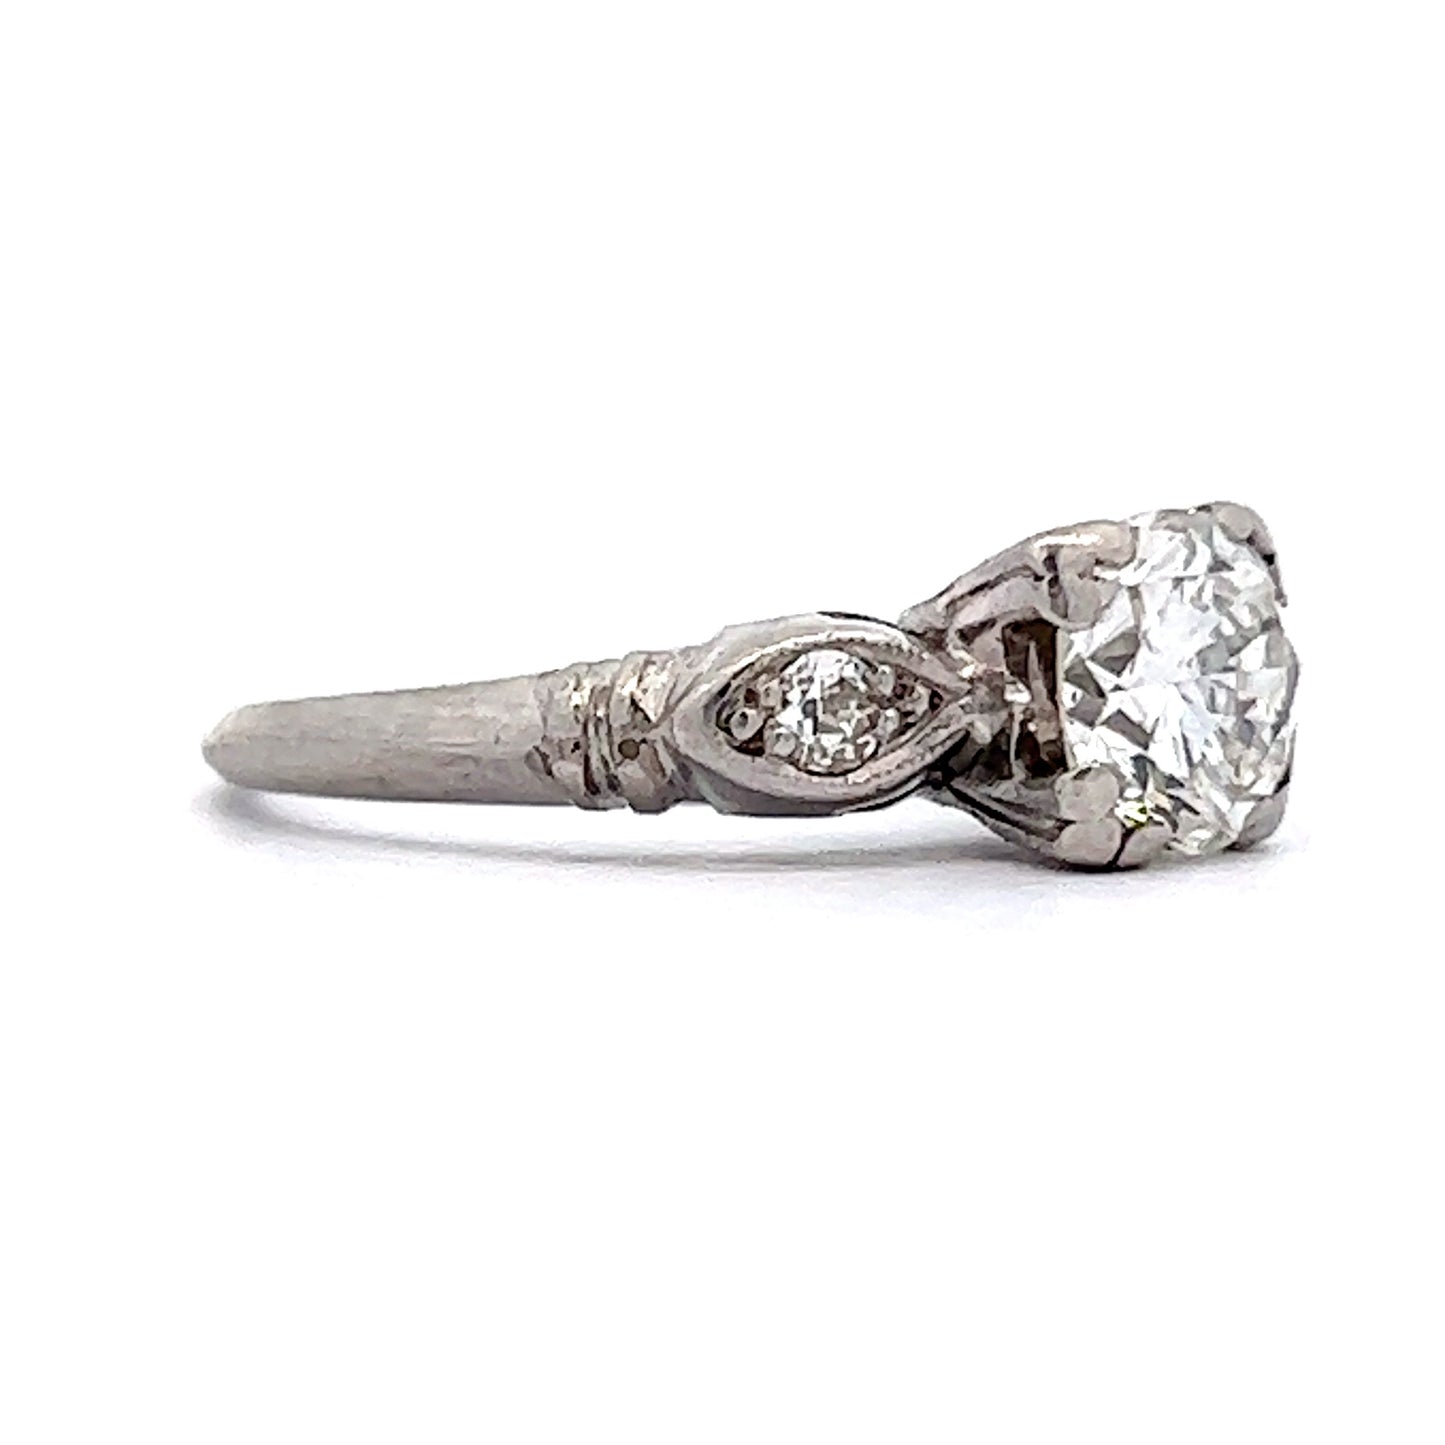 Vintage Three Stone Diamond Engagement Ring in Platinum